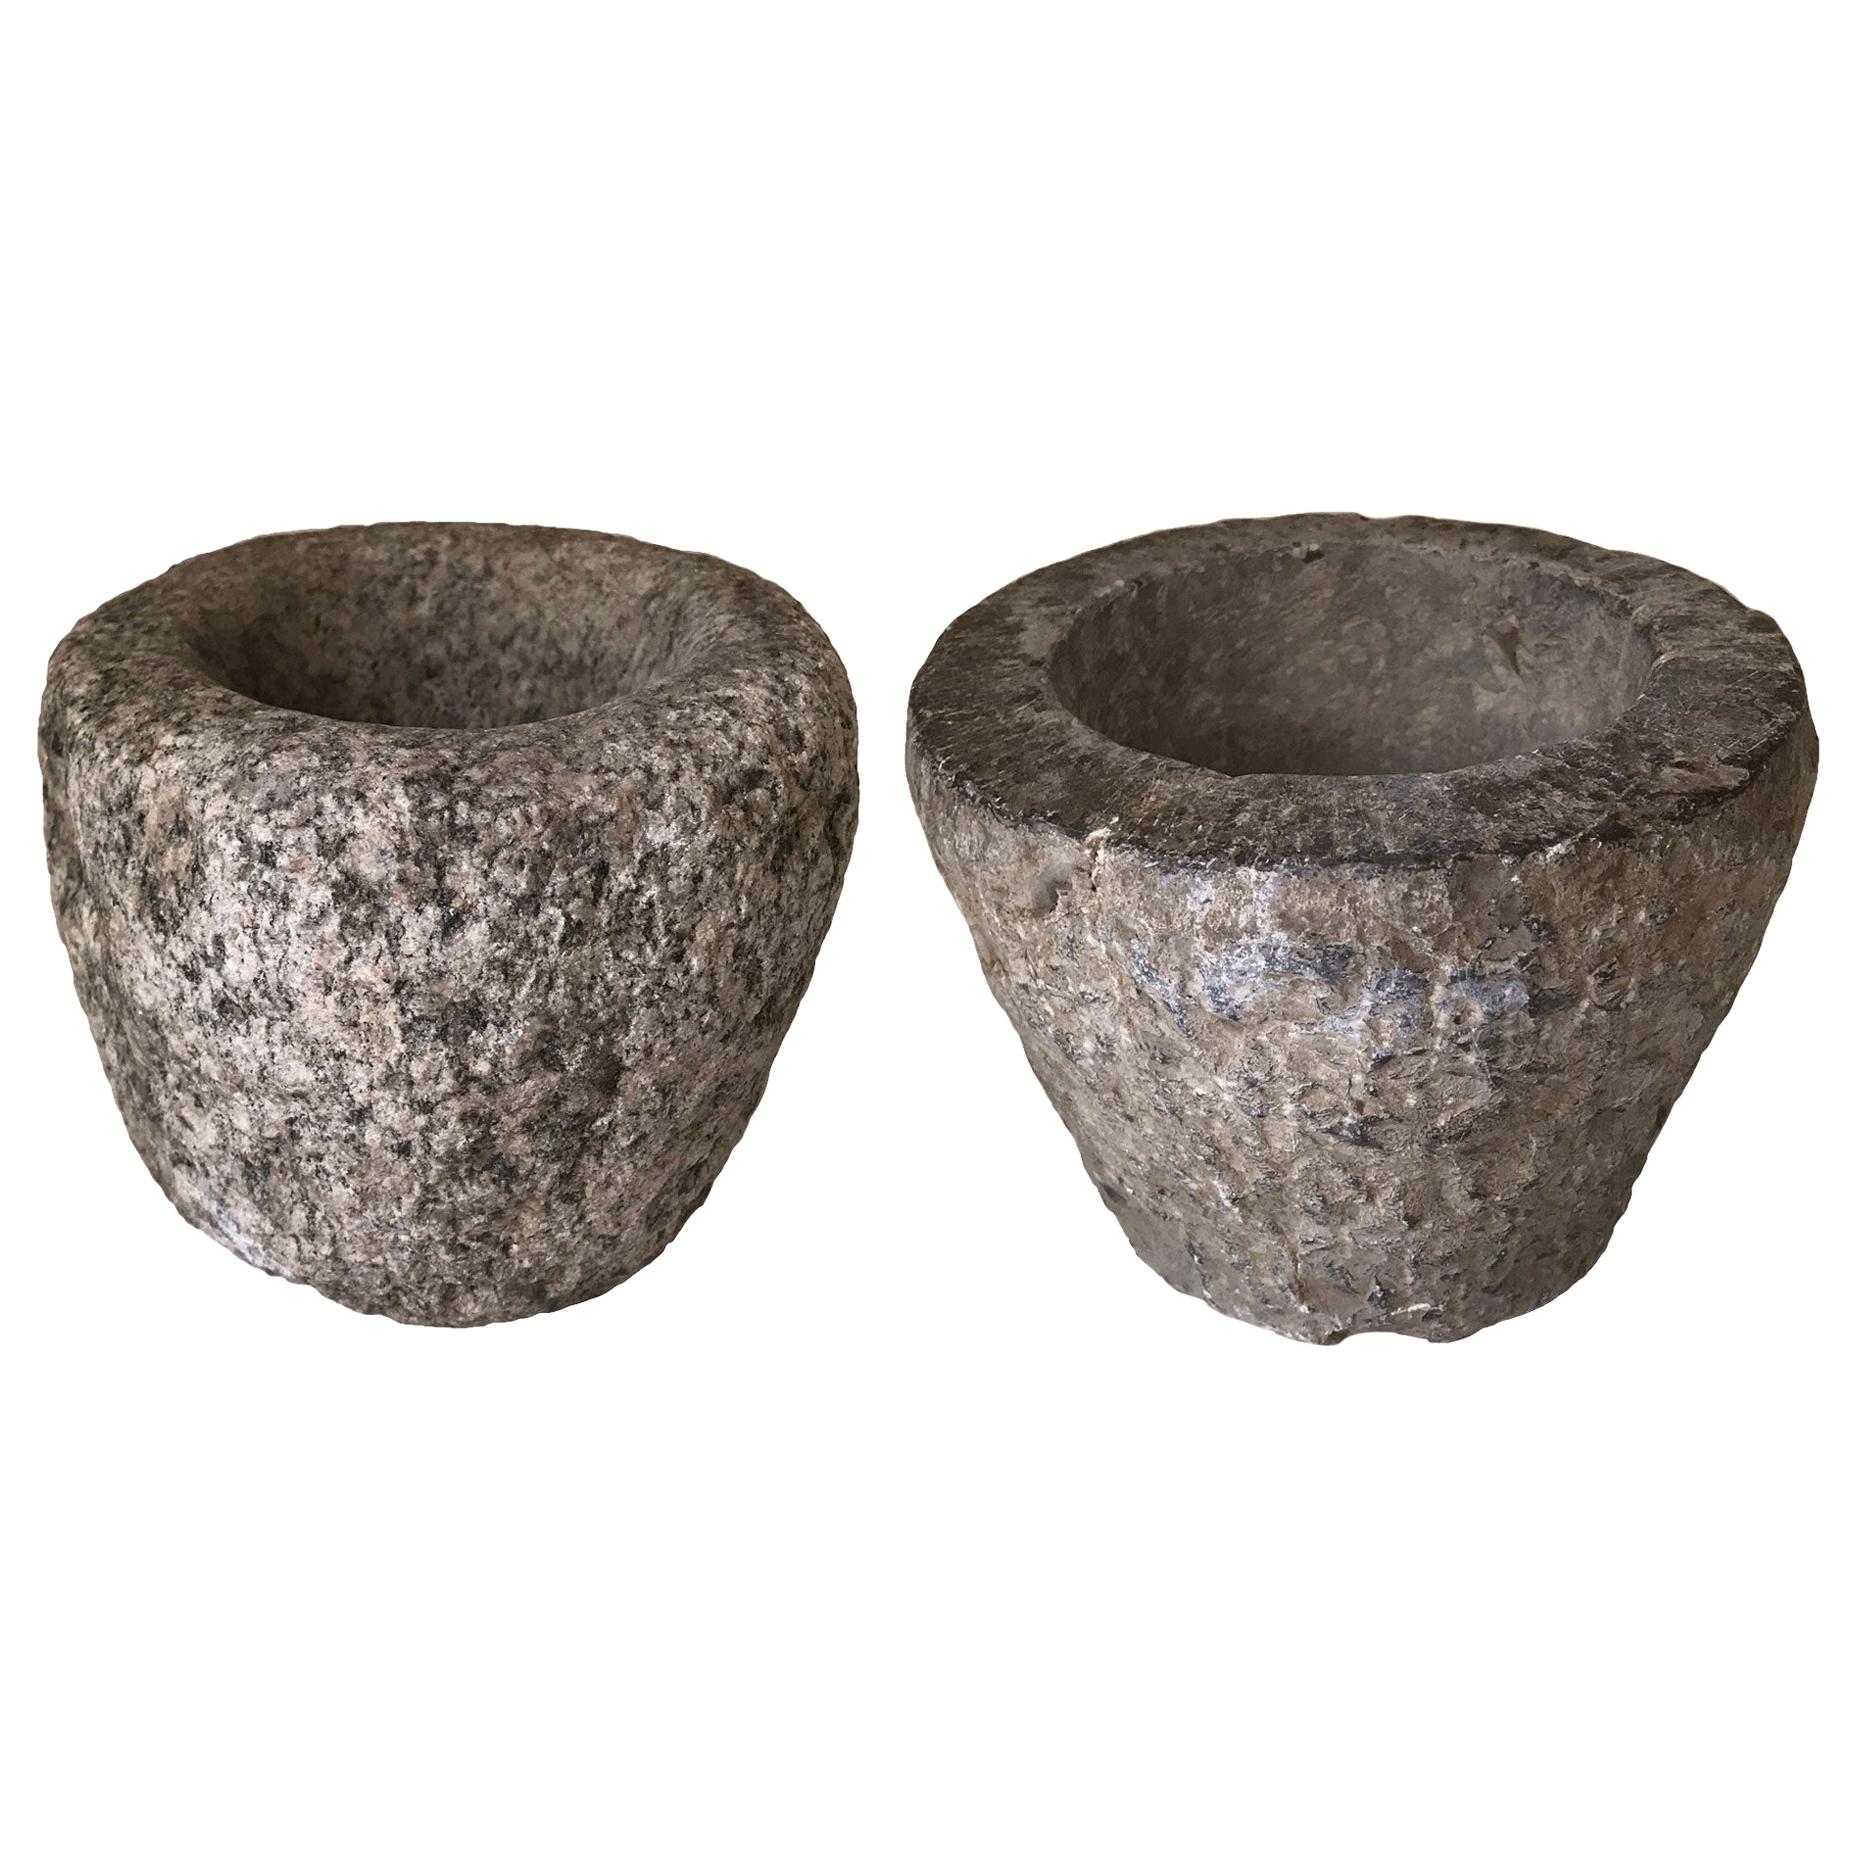 19th Century Rustic Stone Bowls